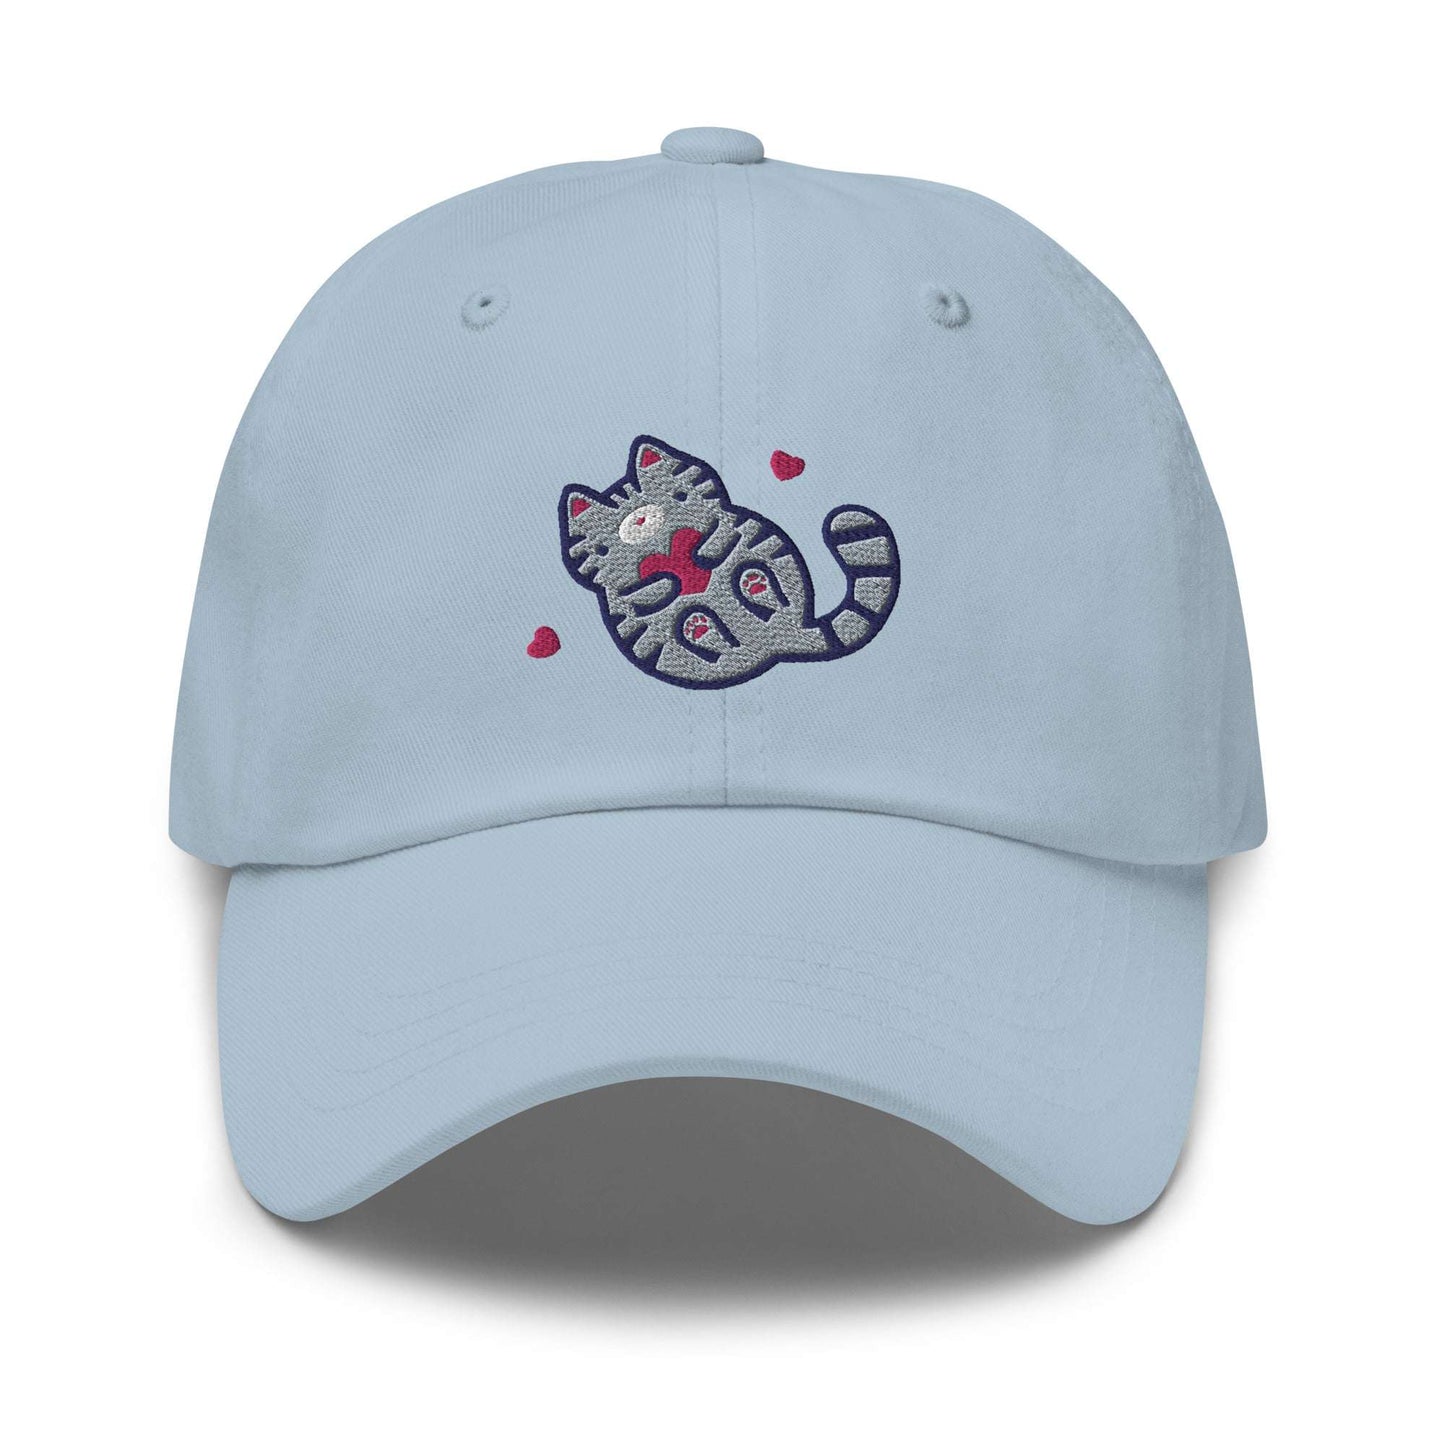 Embroidered Grey Tabby Cat Baseball Cap: Light Blue